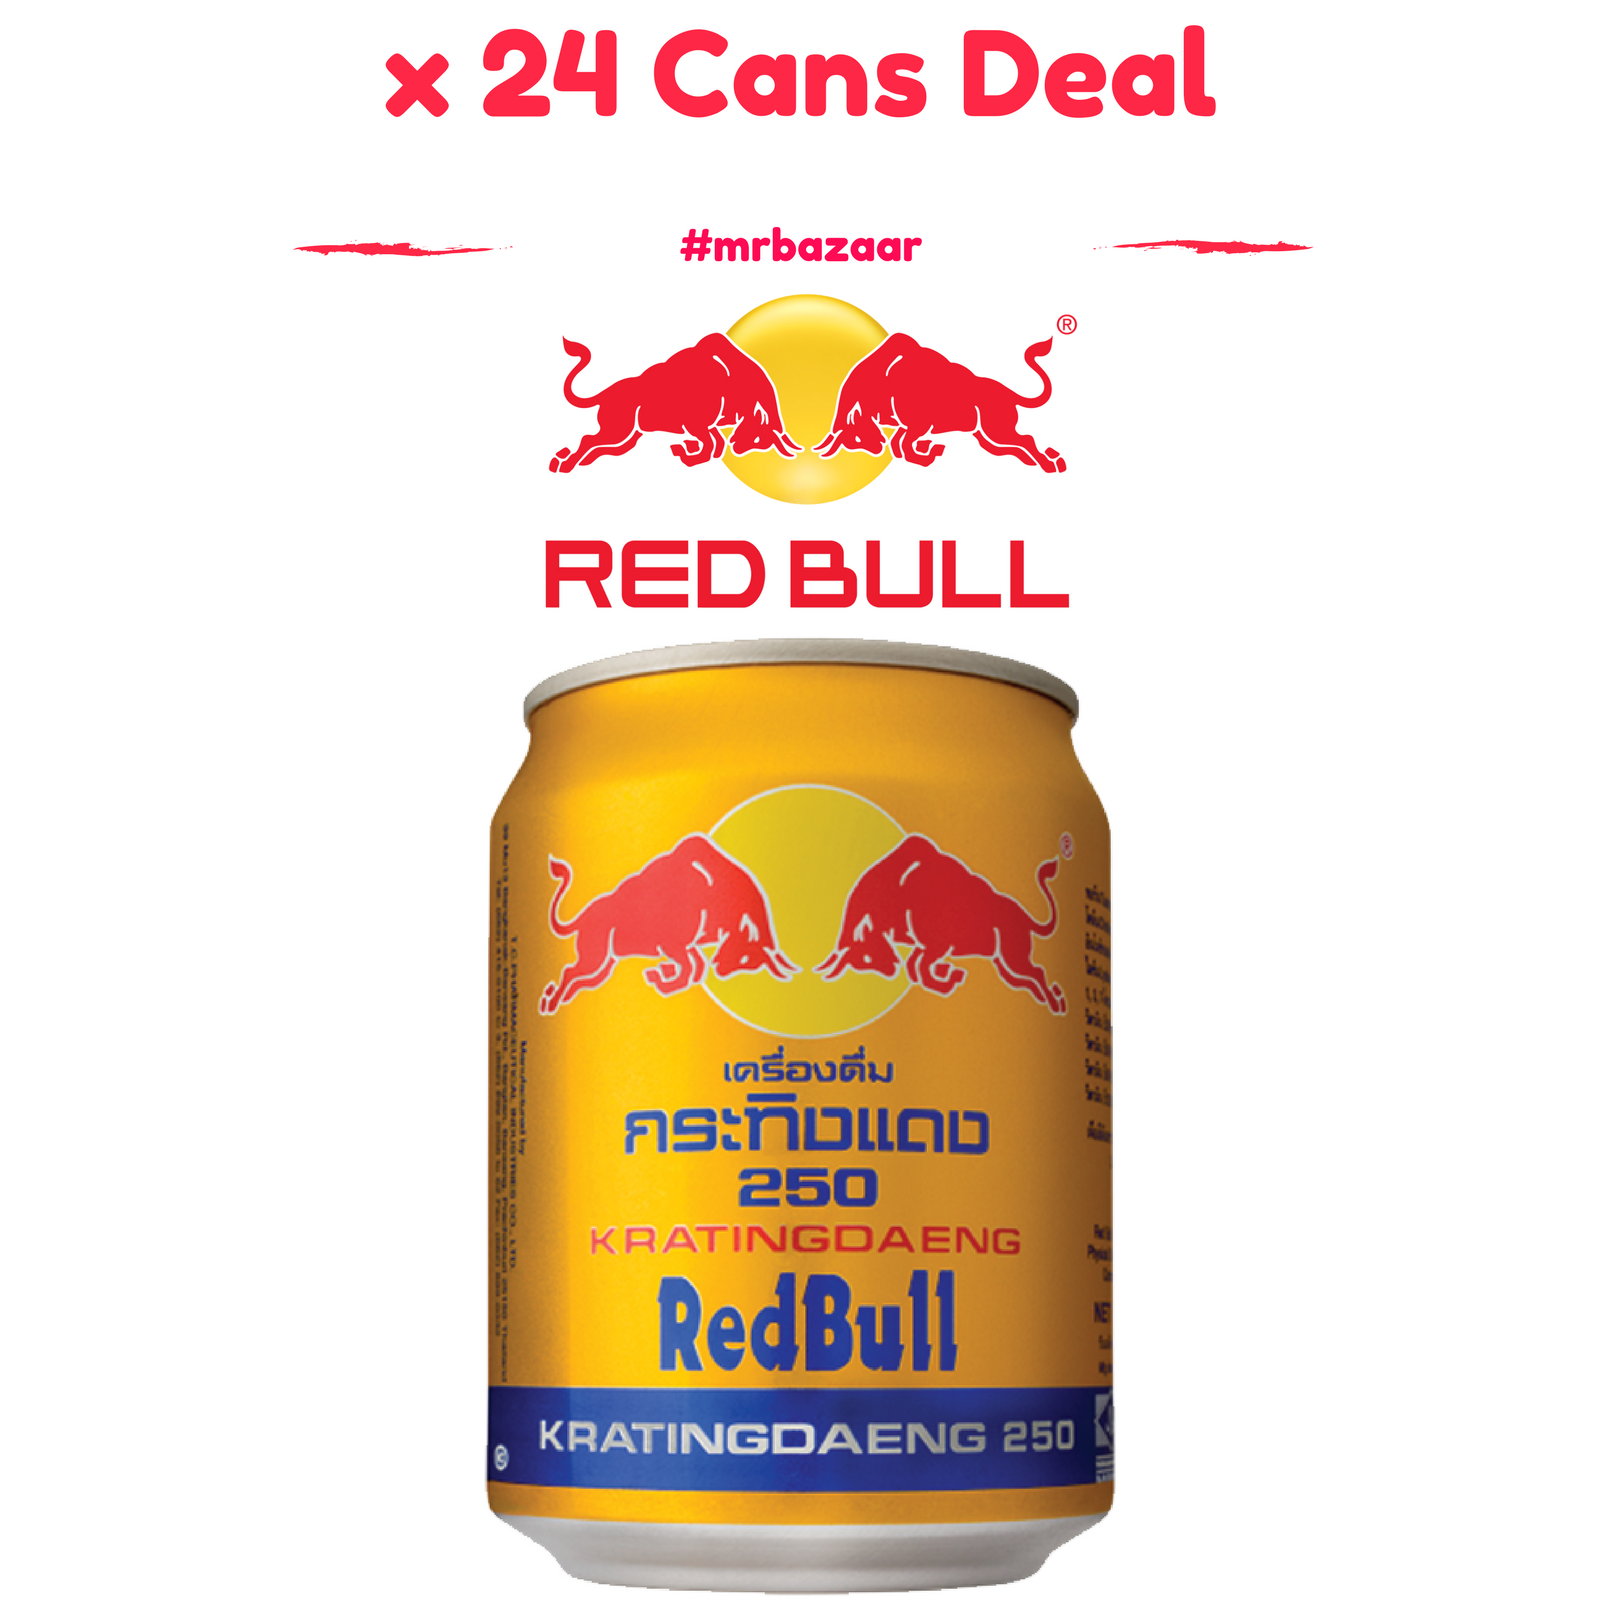 Redbull Energy Drink Kratingdaeng (250ml) x 24 Cans Carton Deal